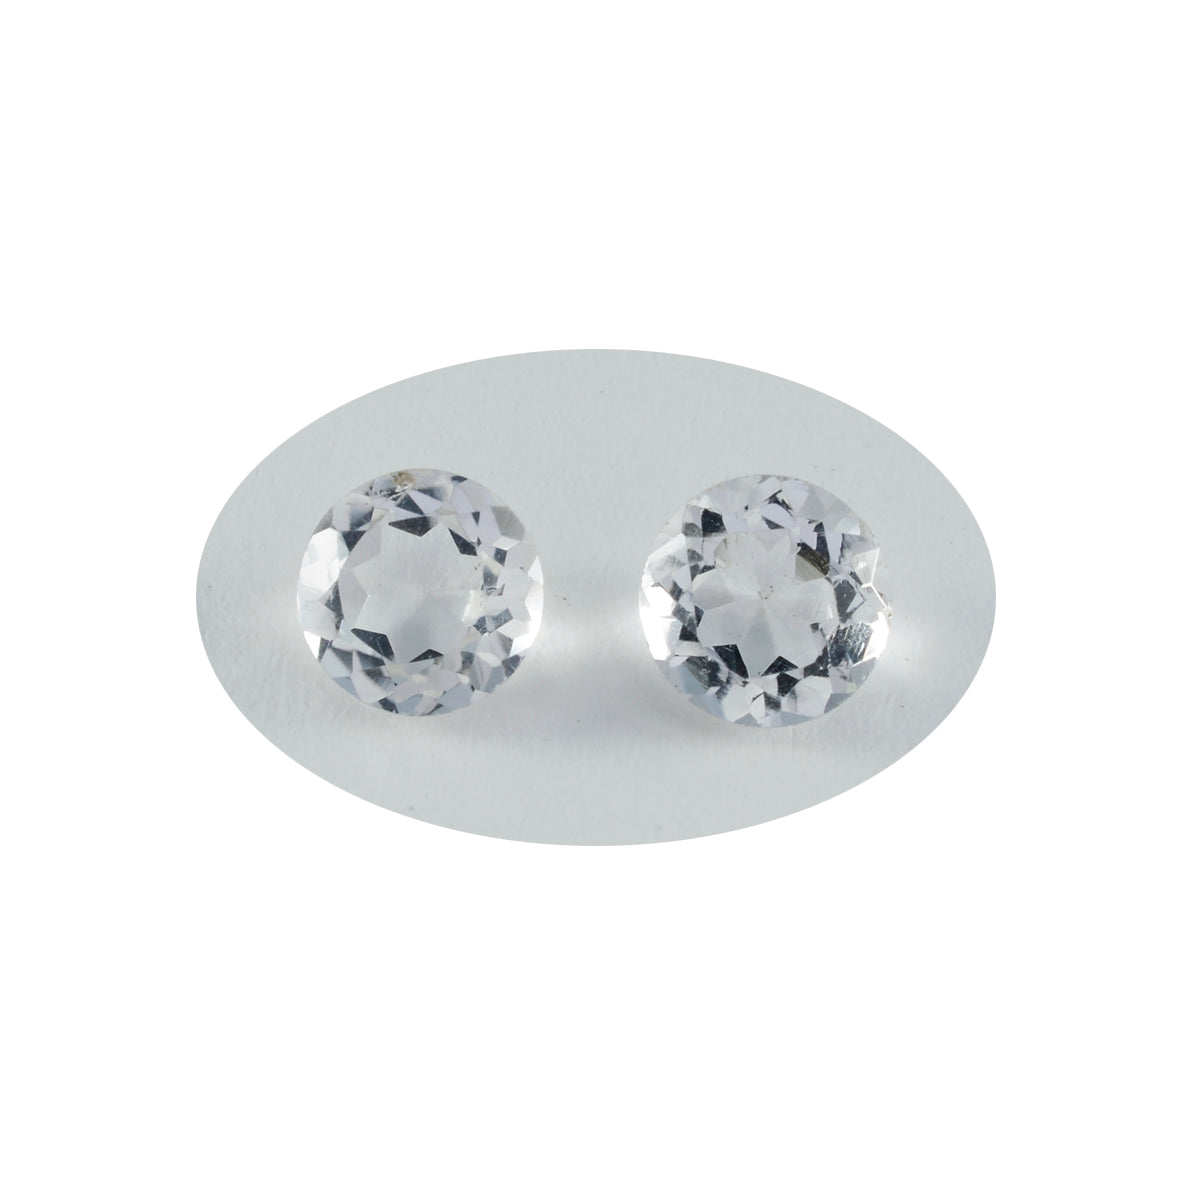 Riyogems 1PC White Crystal Quartz Faceted 6x6 mm Round Shape cute Quality Stone